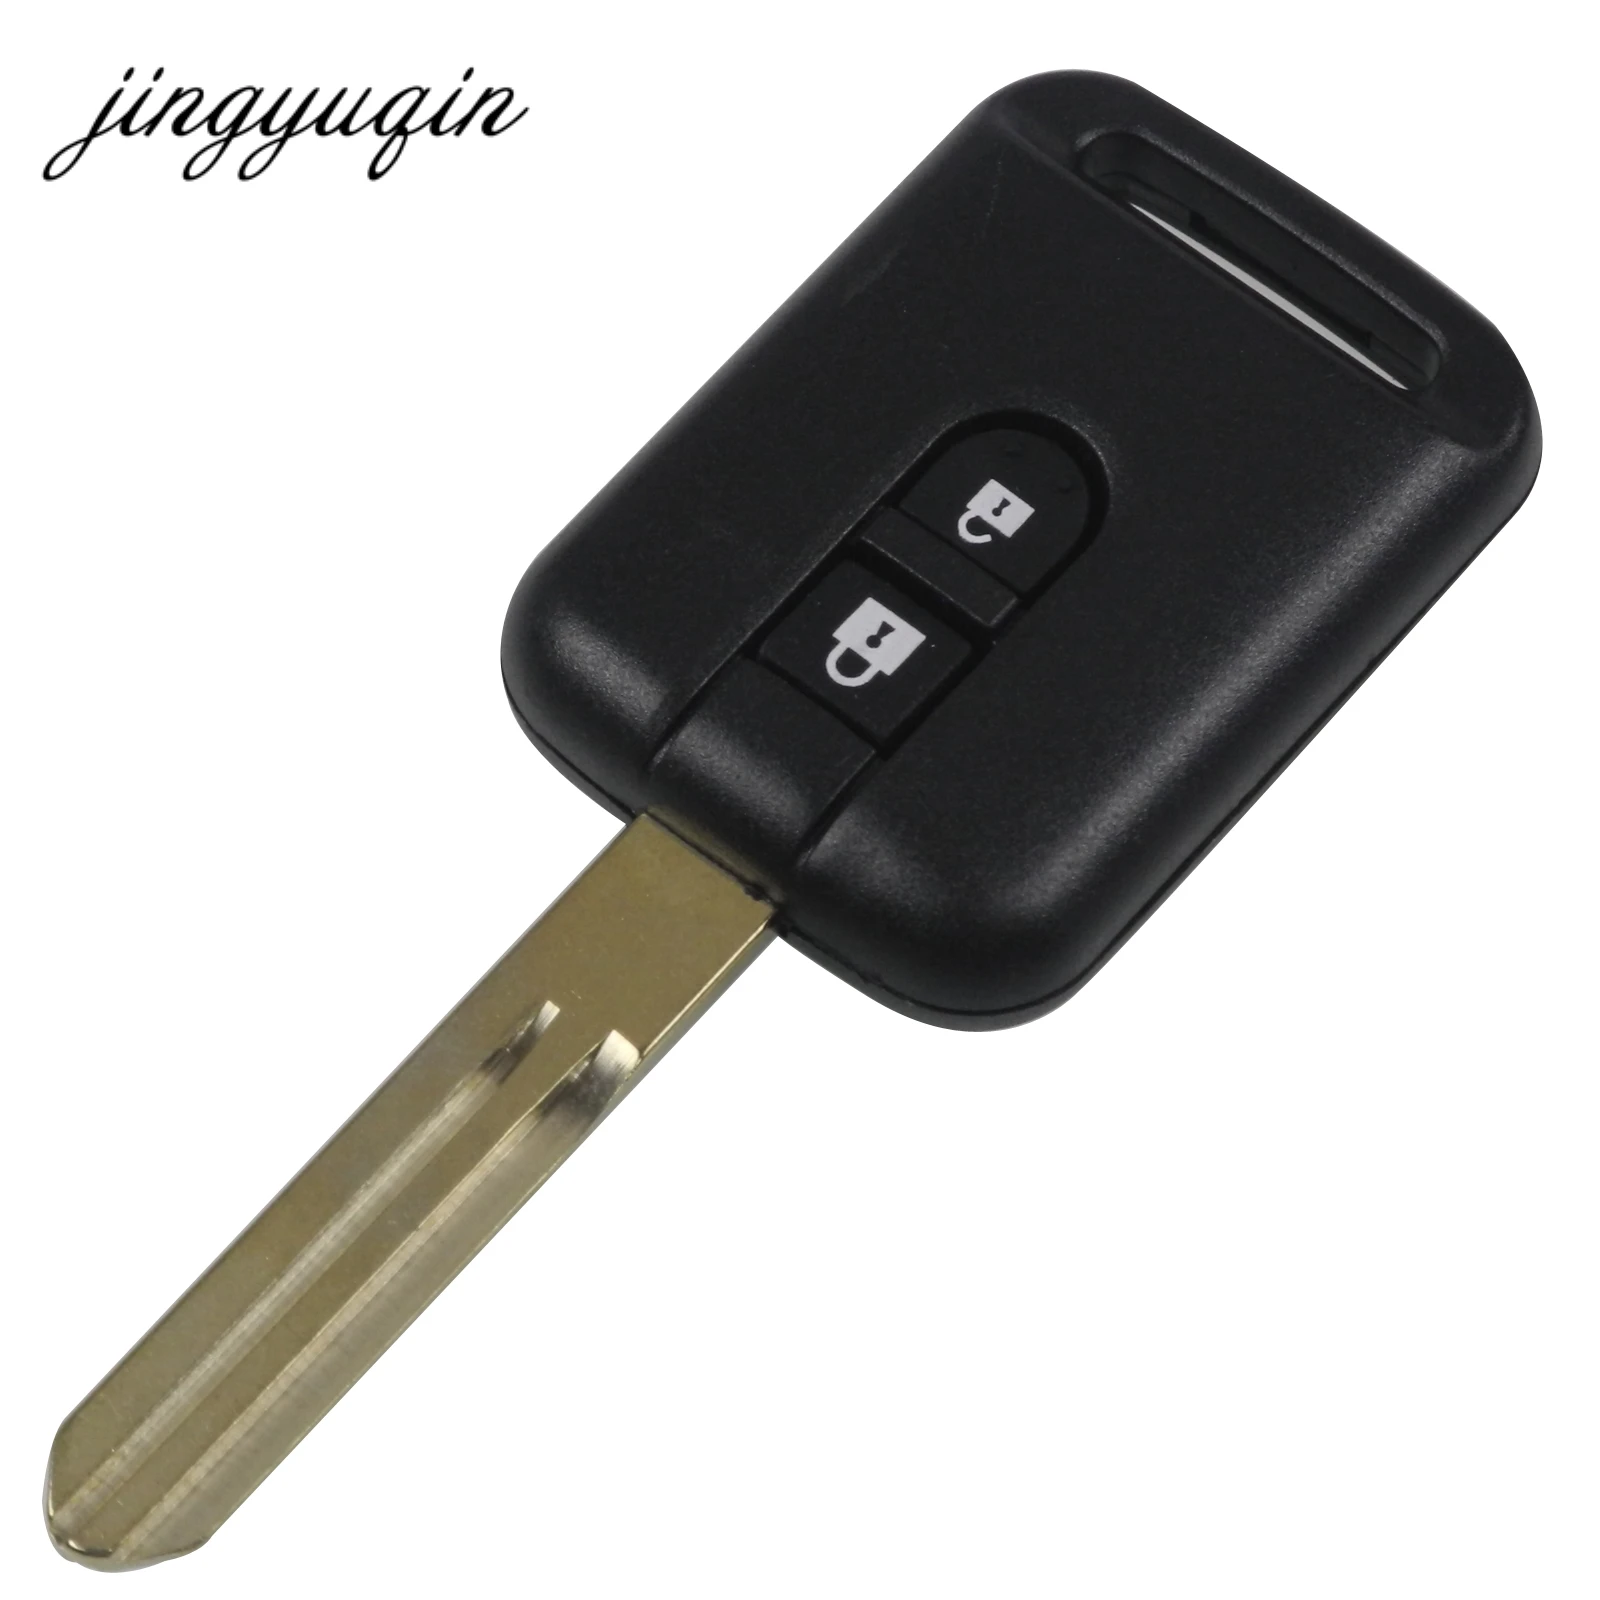 

jingyuqin Remote Key Shell for Nissan Pathfinder Qashqai Nissan Micra Navara Almera Note 05-14 Replacement Case Fob 2 Button